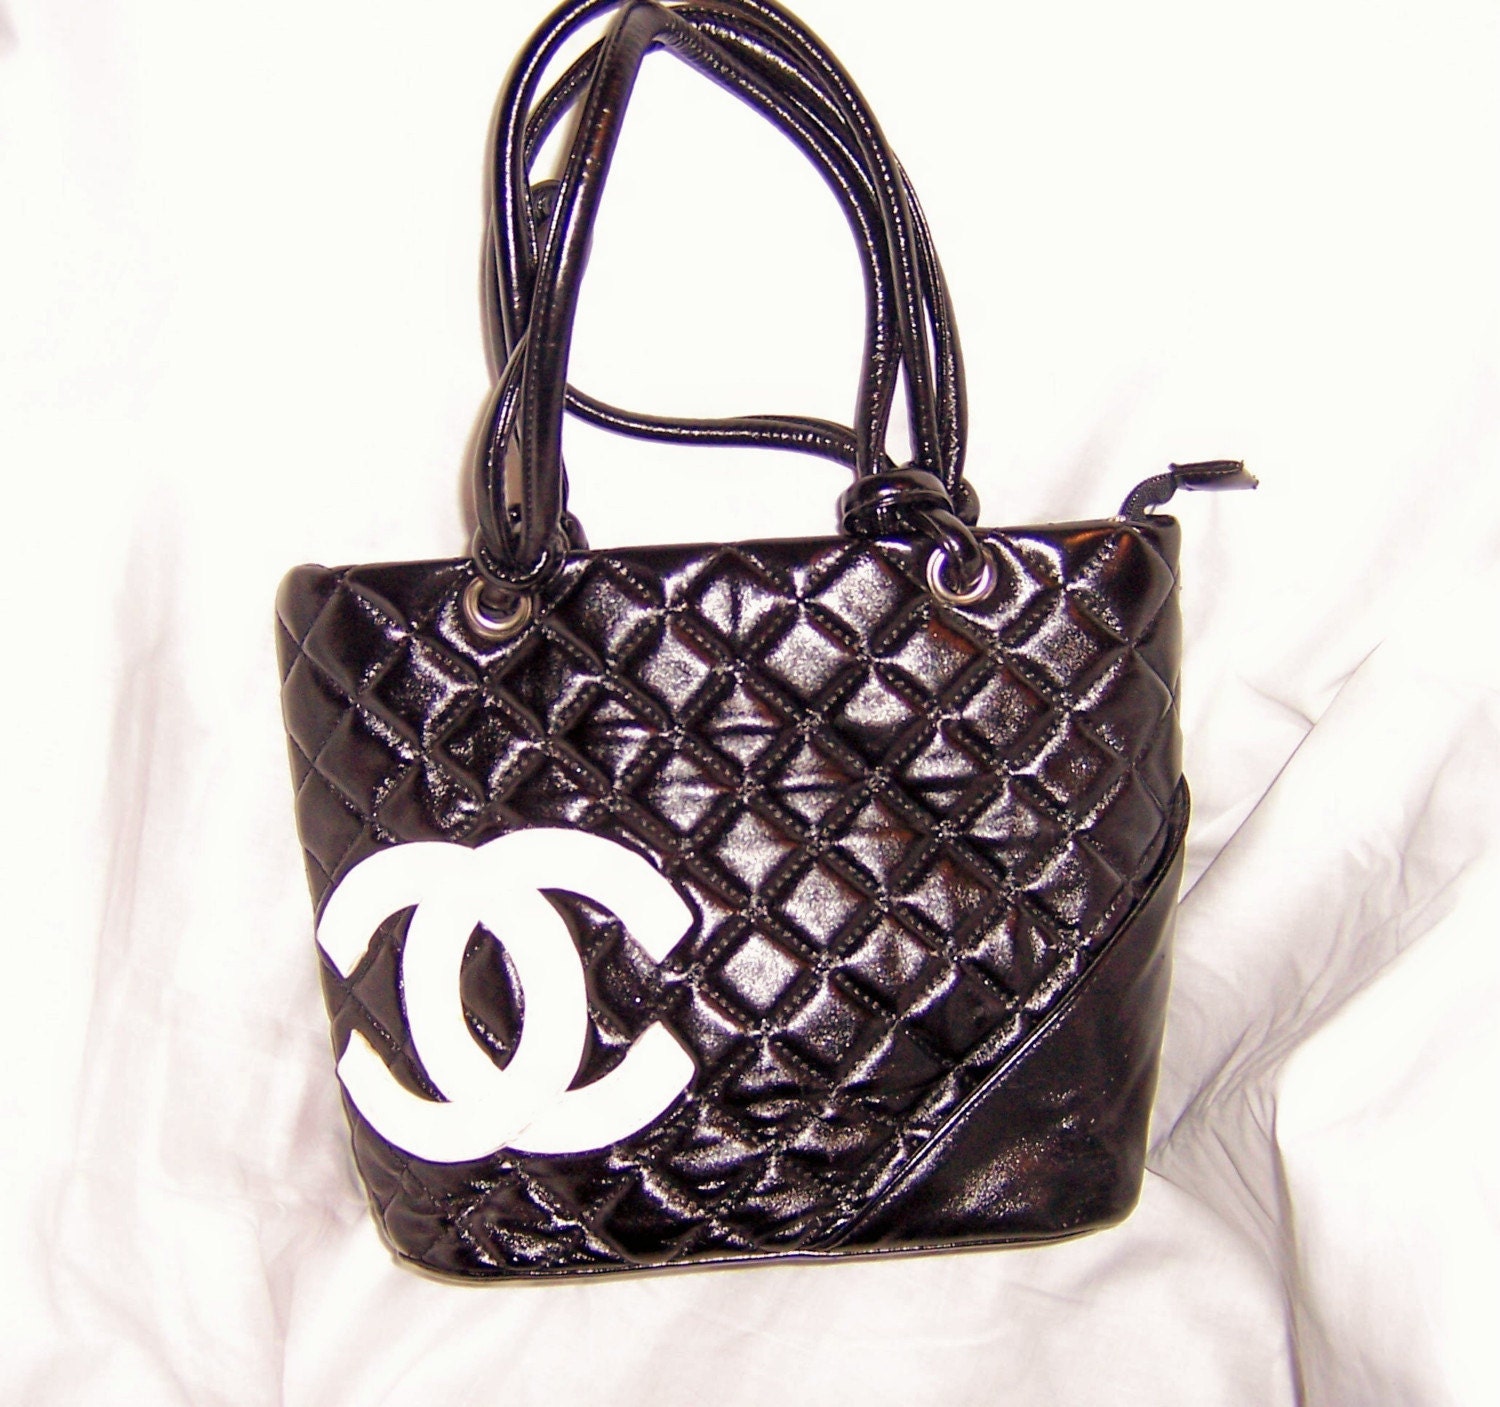 Prada Bags: Chanel Bags Knock Off